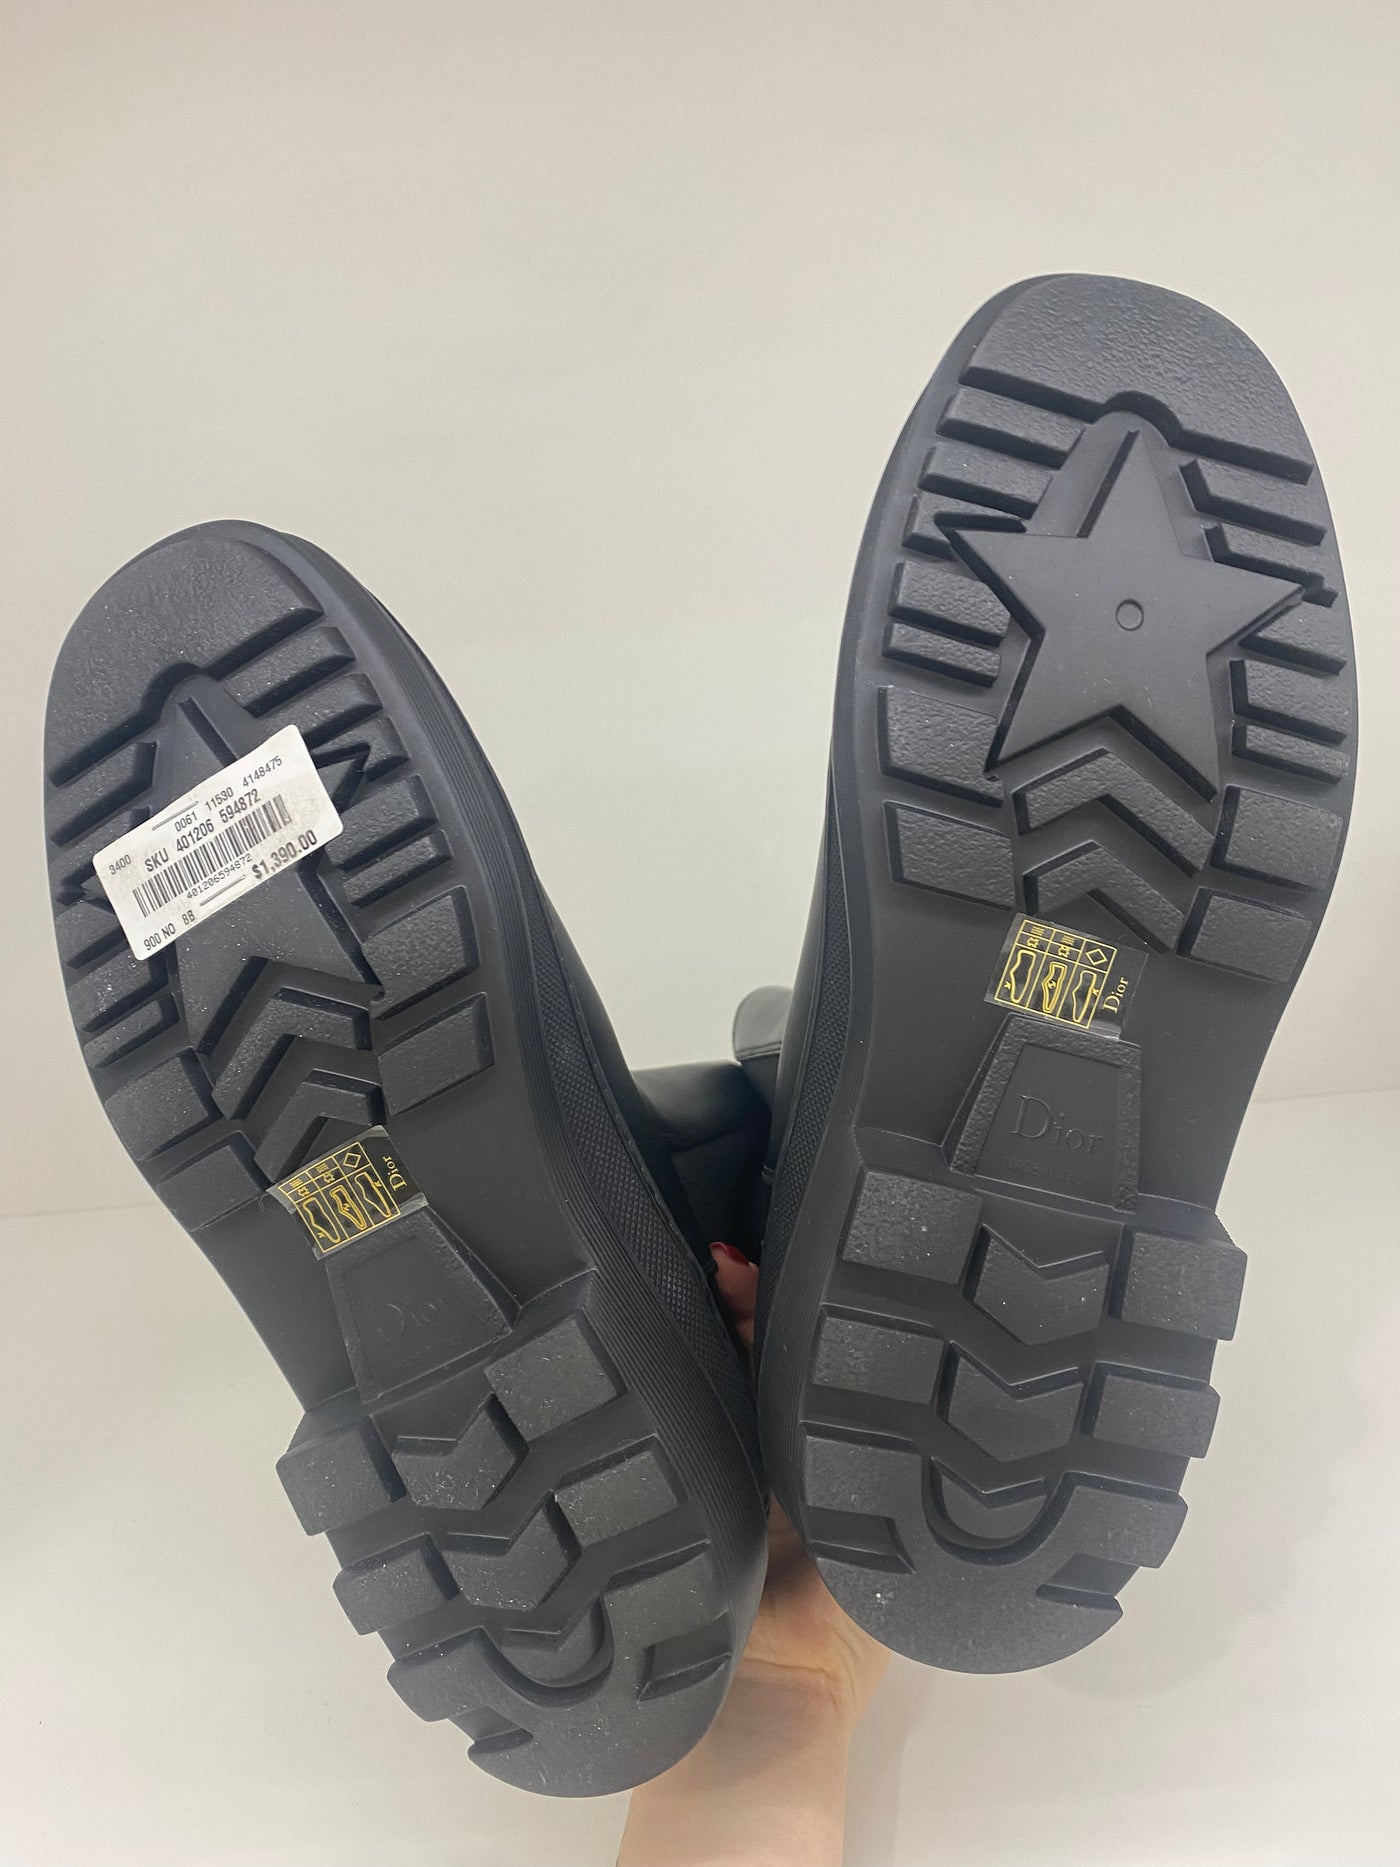 Christian Dior Black Combat Boots - Size 40